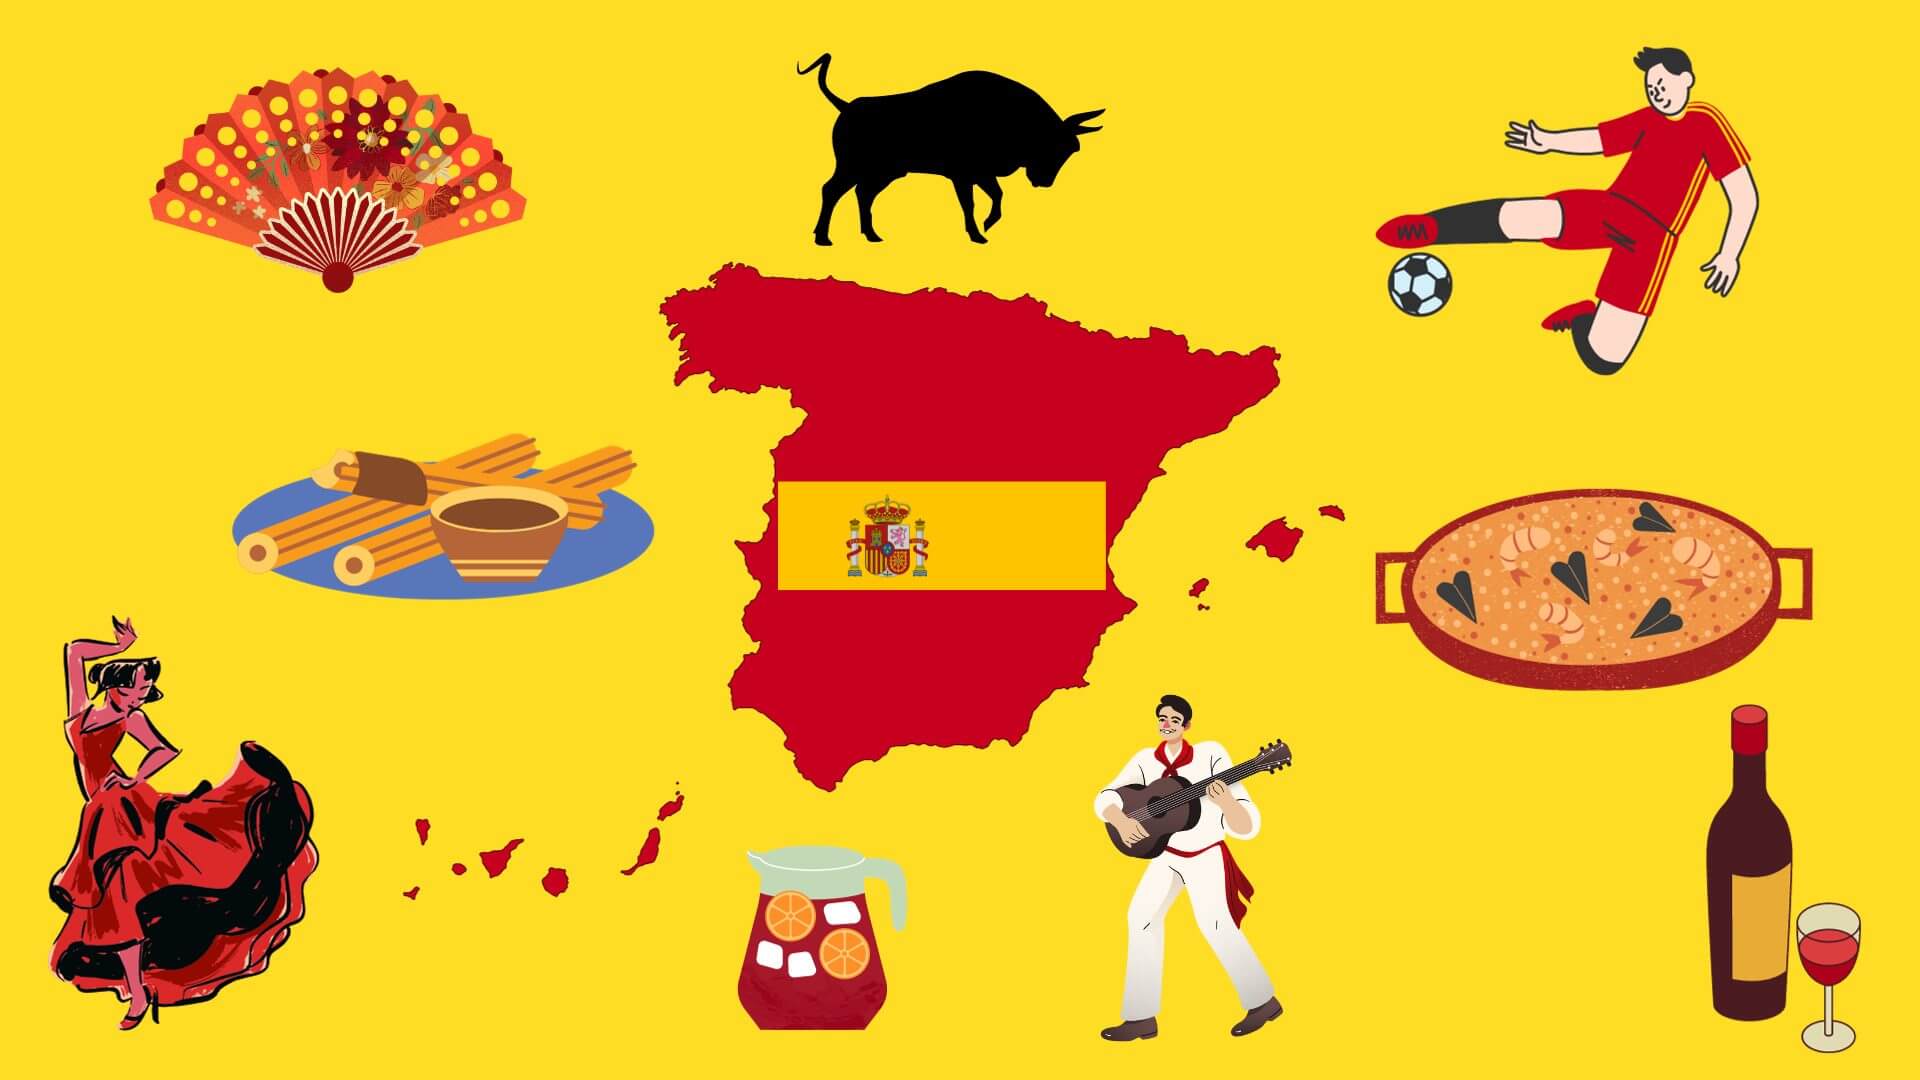 Instituto Hispánico de Murcia - إسبانيا: 20 سببًا لتكون أفضل بلد في العالم